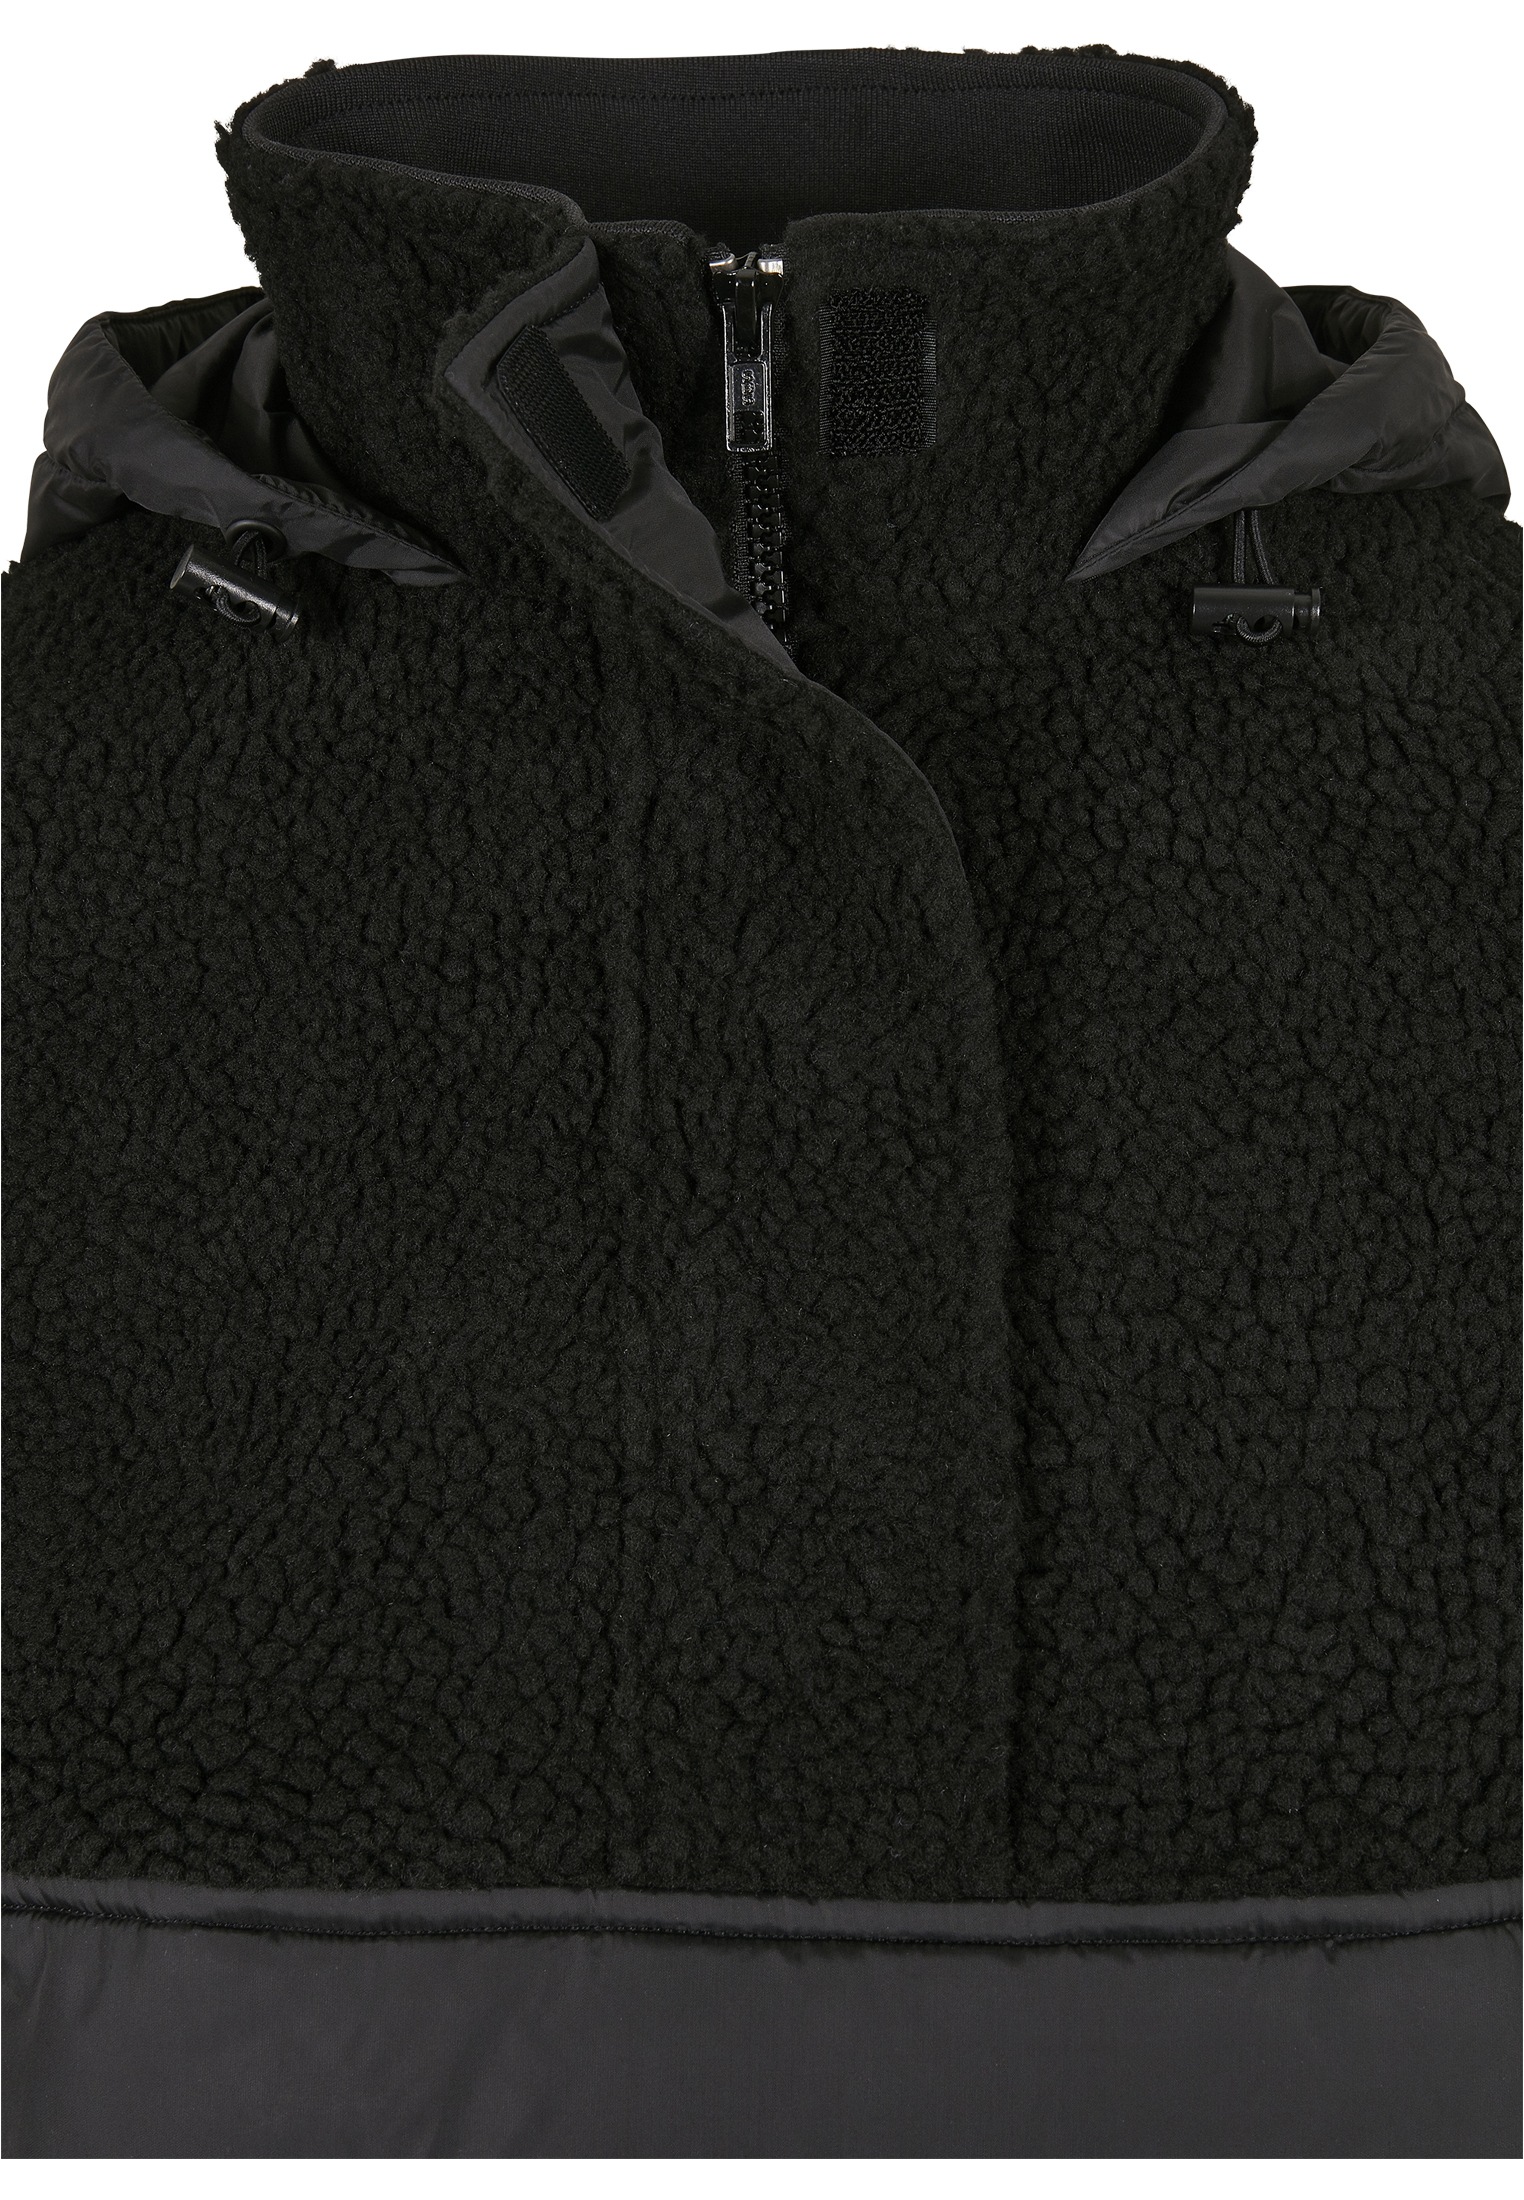 URBAN CLASSICS Winterjacke »Damen St.), online Ladies Jacket«, Pull (1 Mix Over mit Sherpa Kapuze